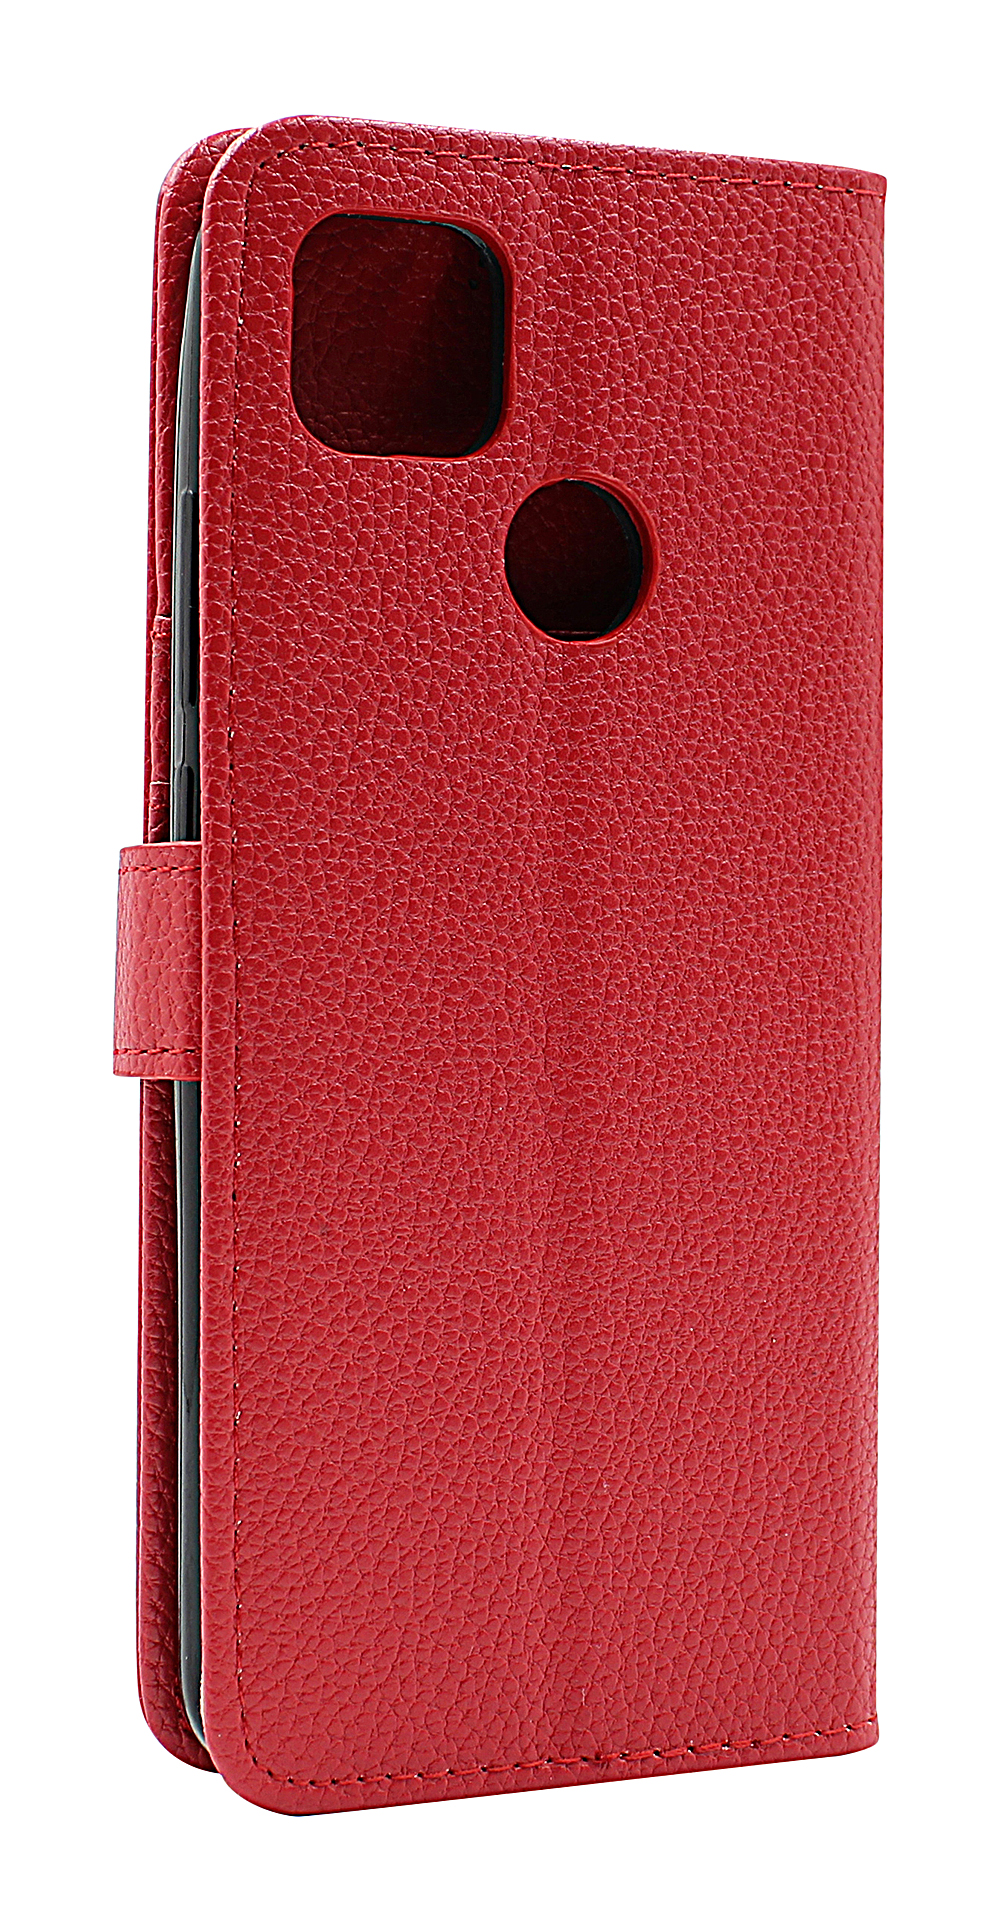 New Standcase Wallet Xiaomi Redmi 9C